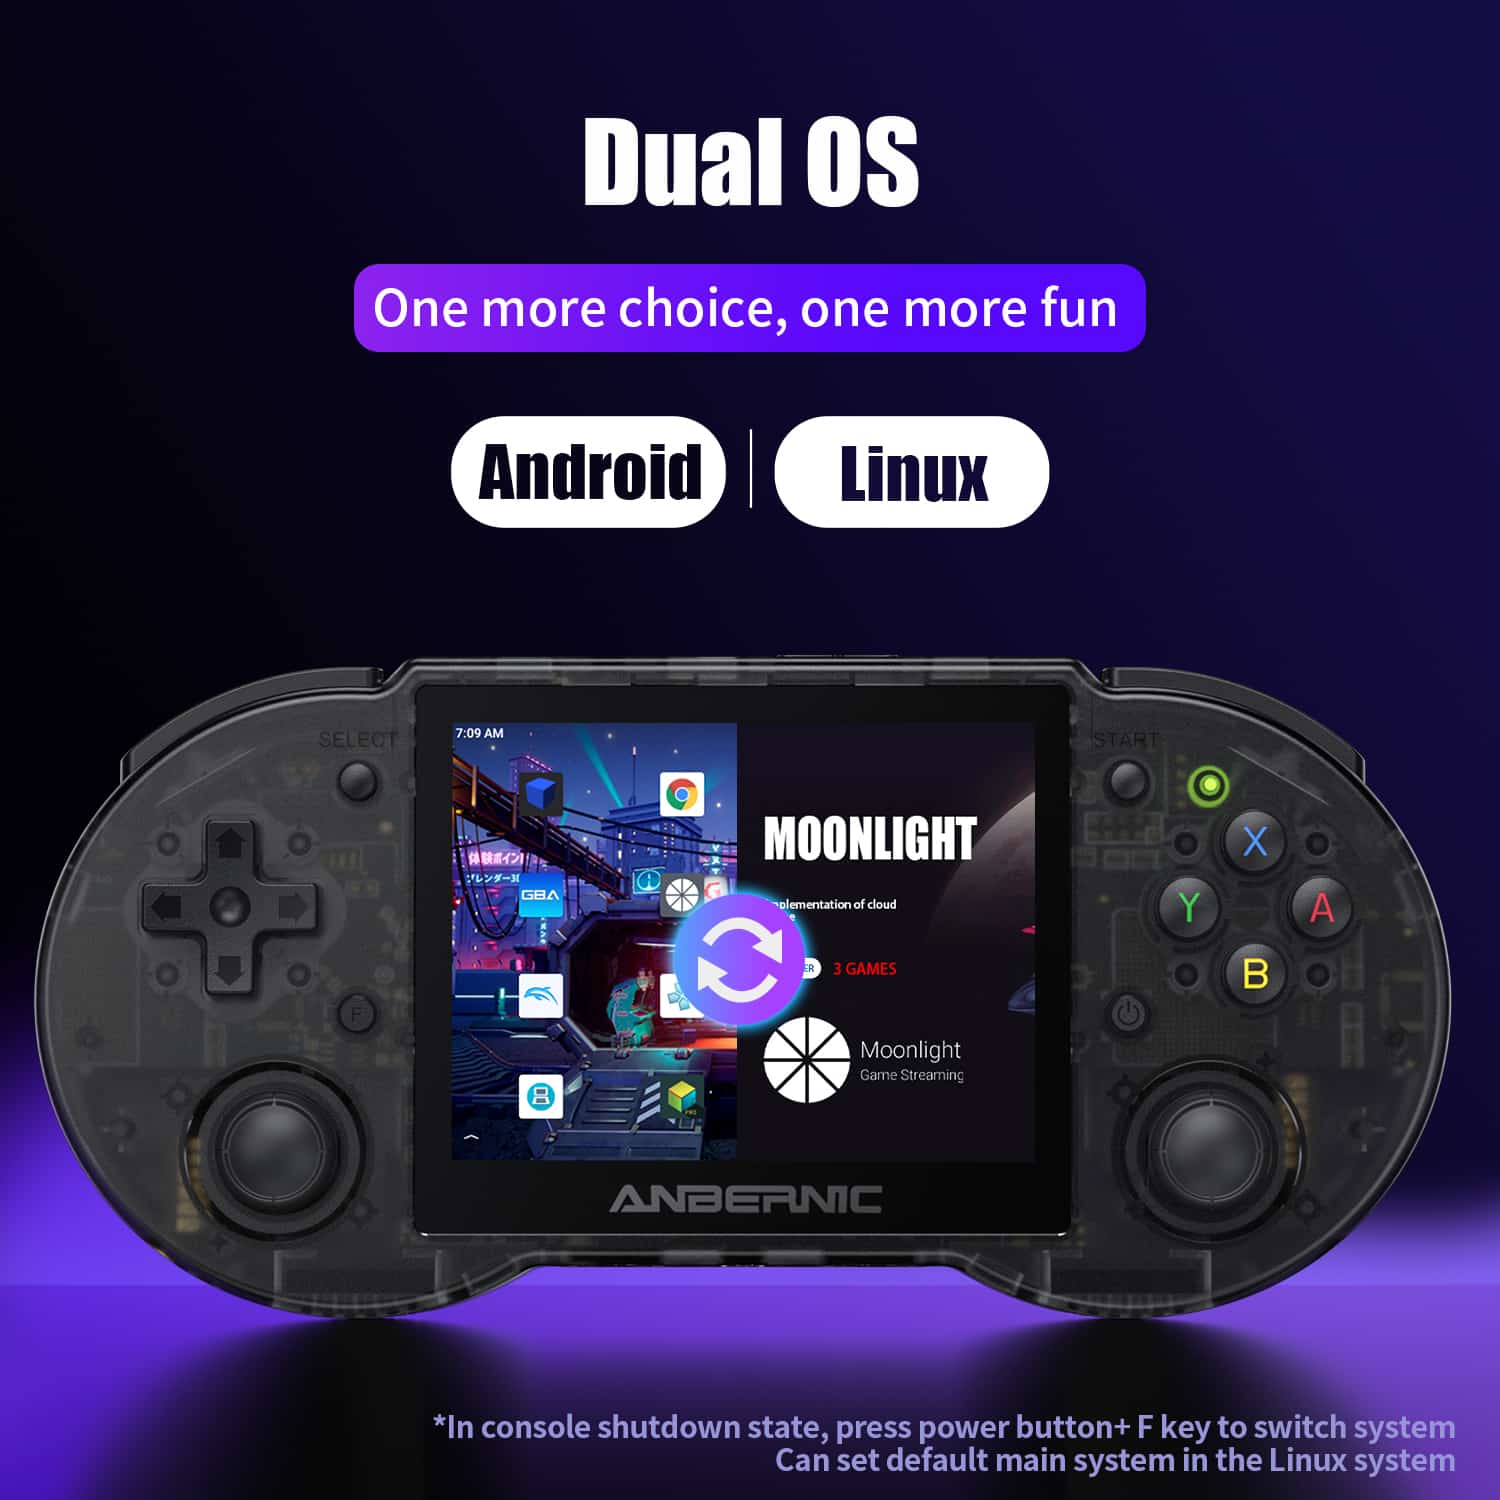 RG353P Dual OS .more choice , more fun